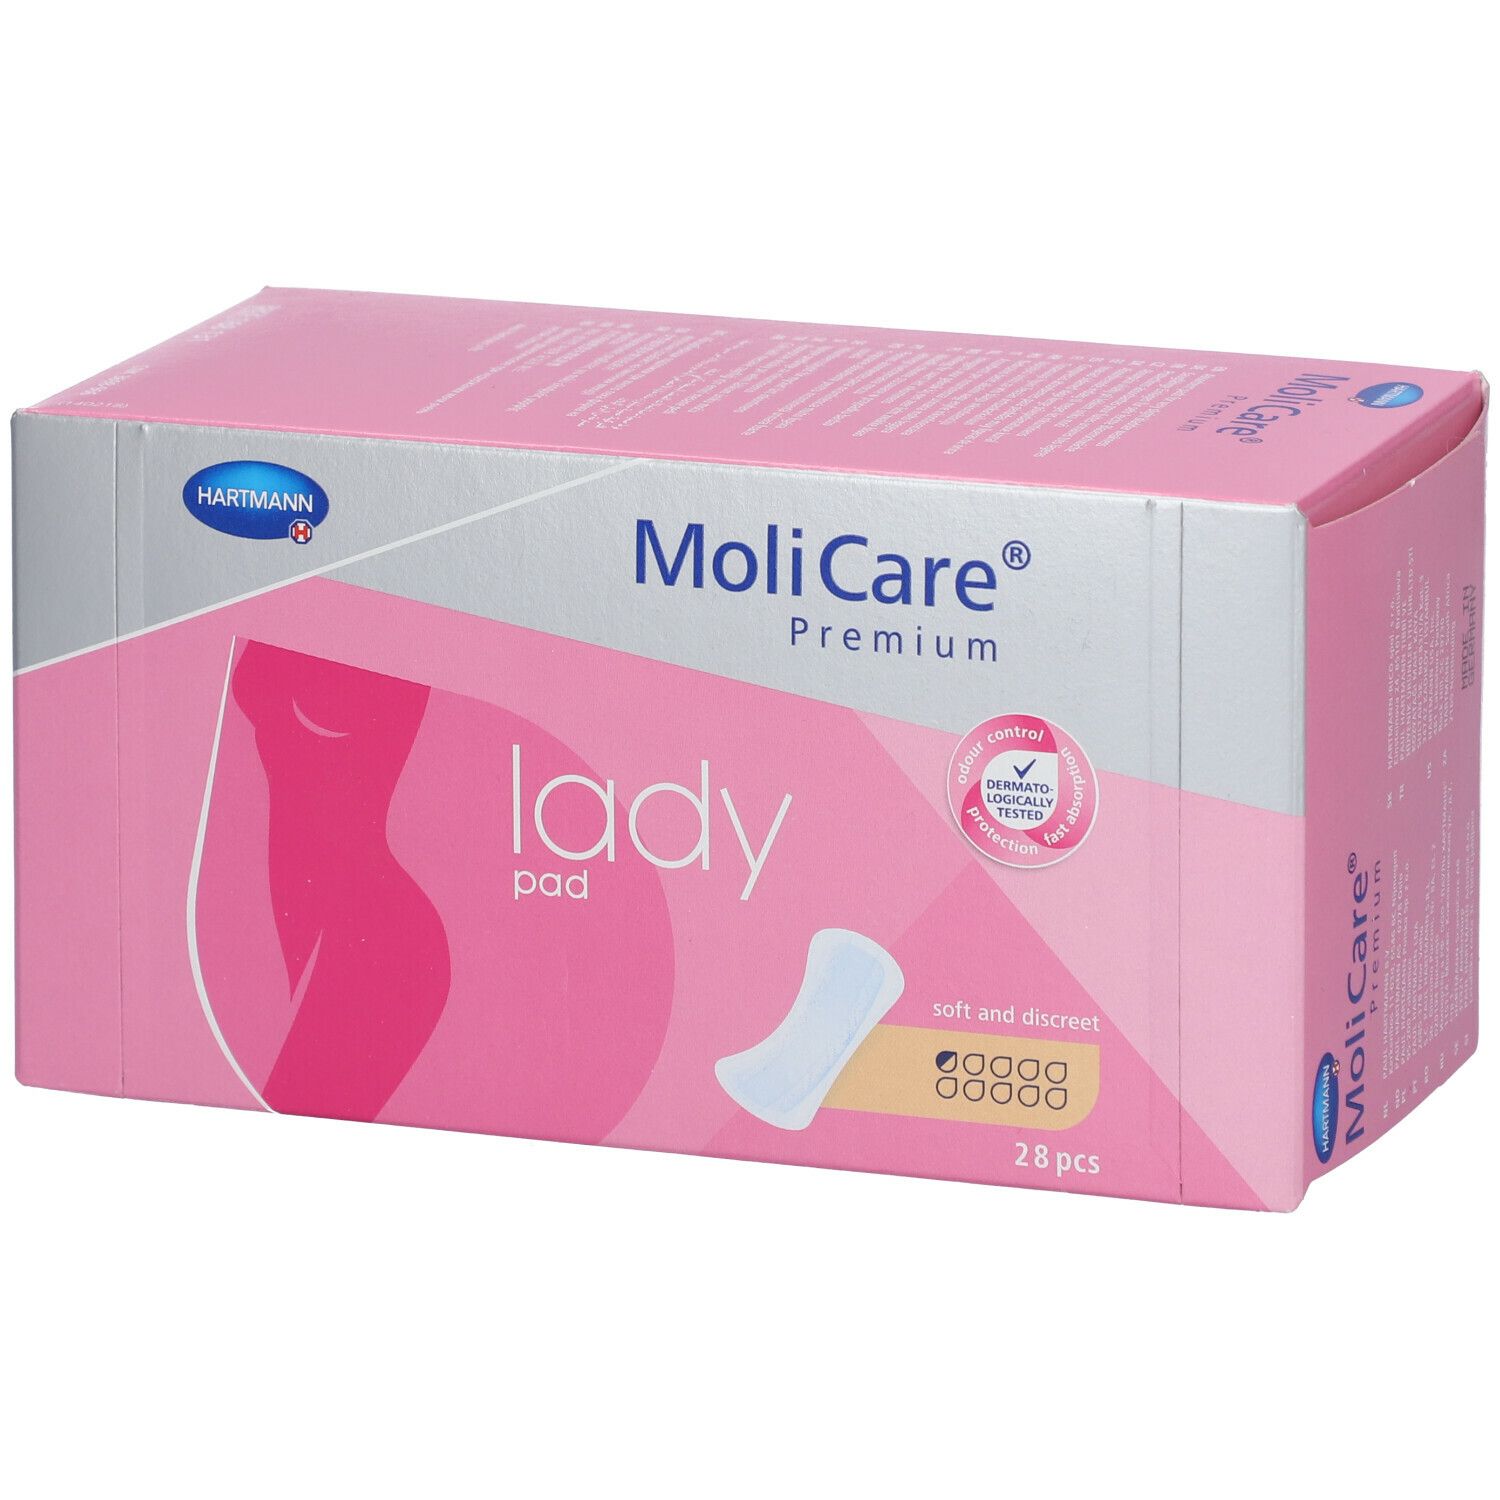 Image of MoliCare® Premium lady pad 0,5